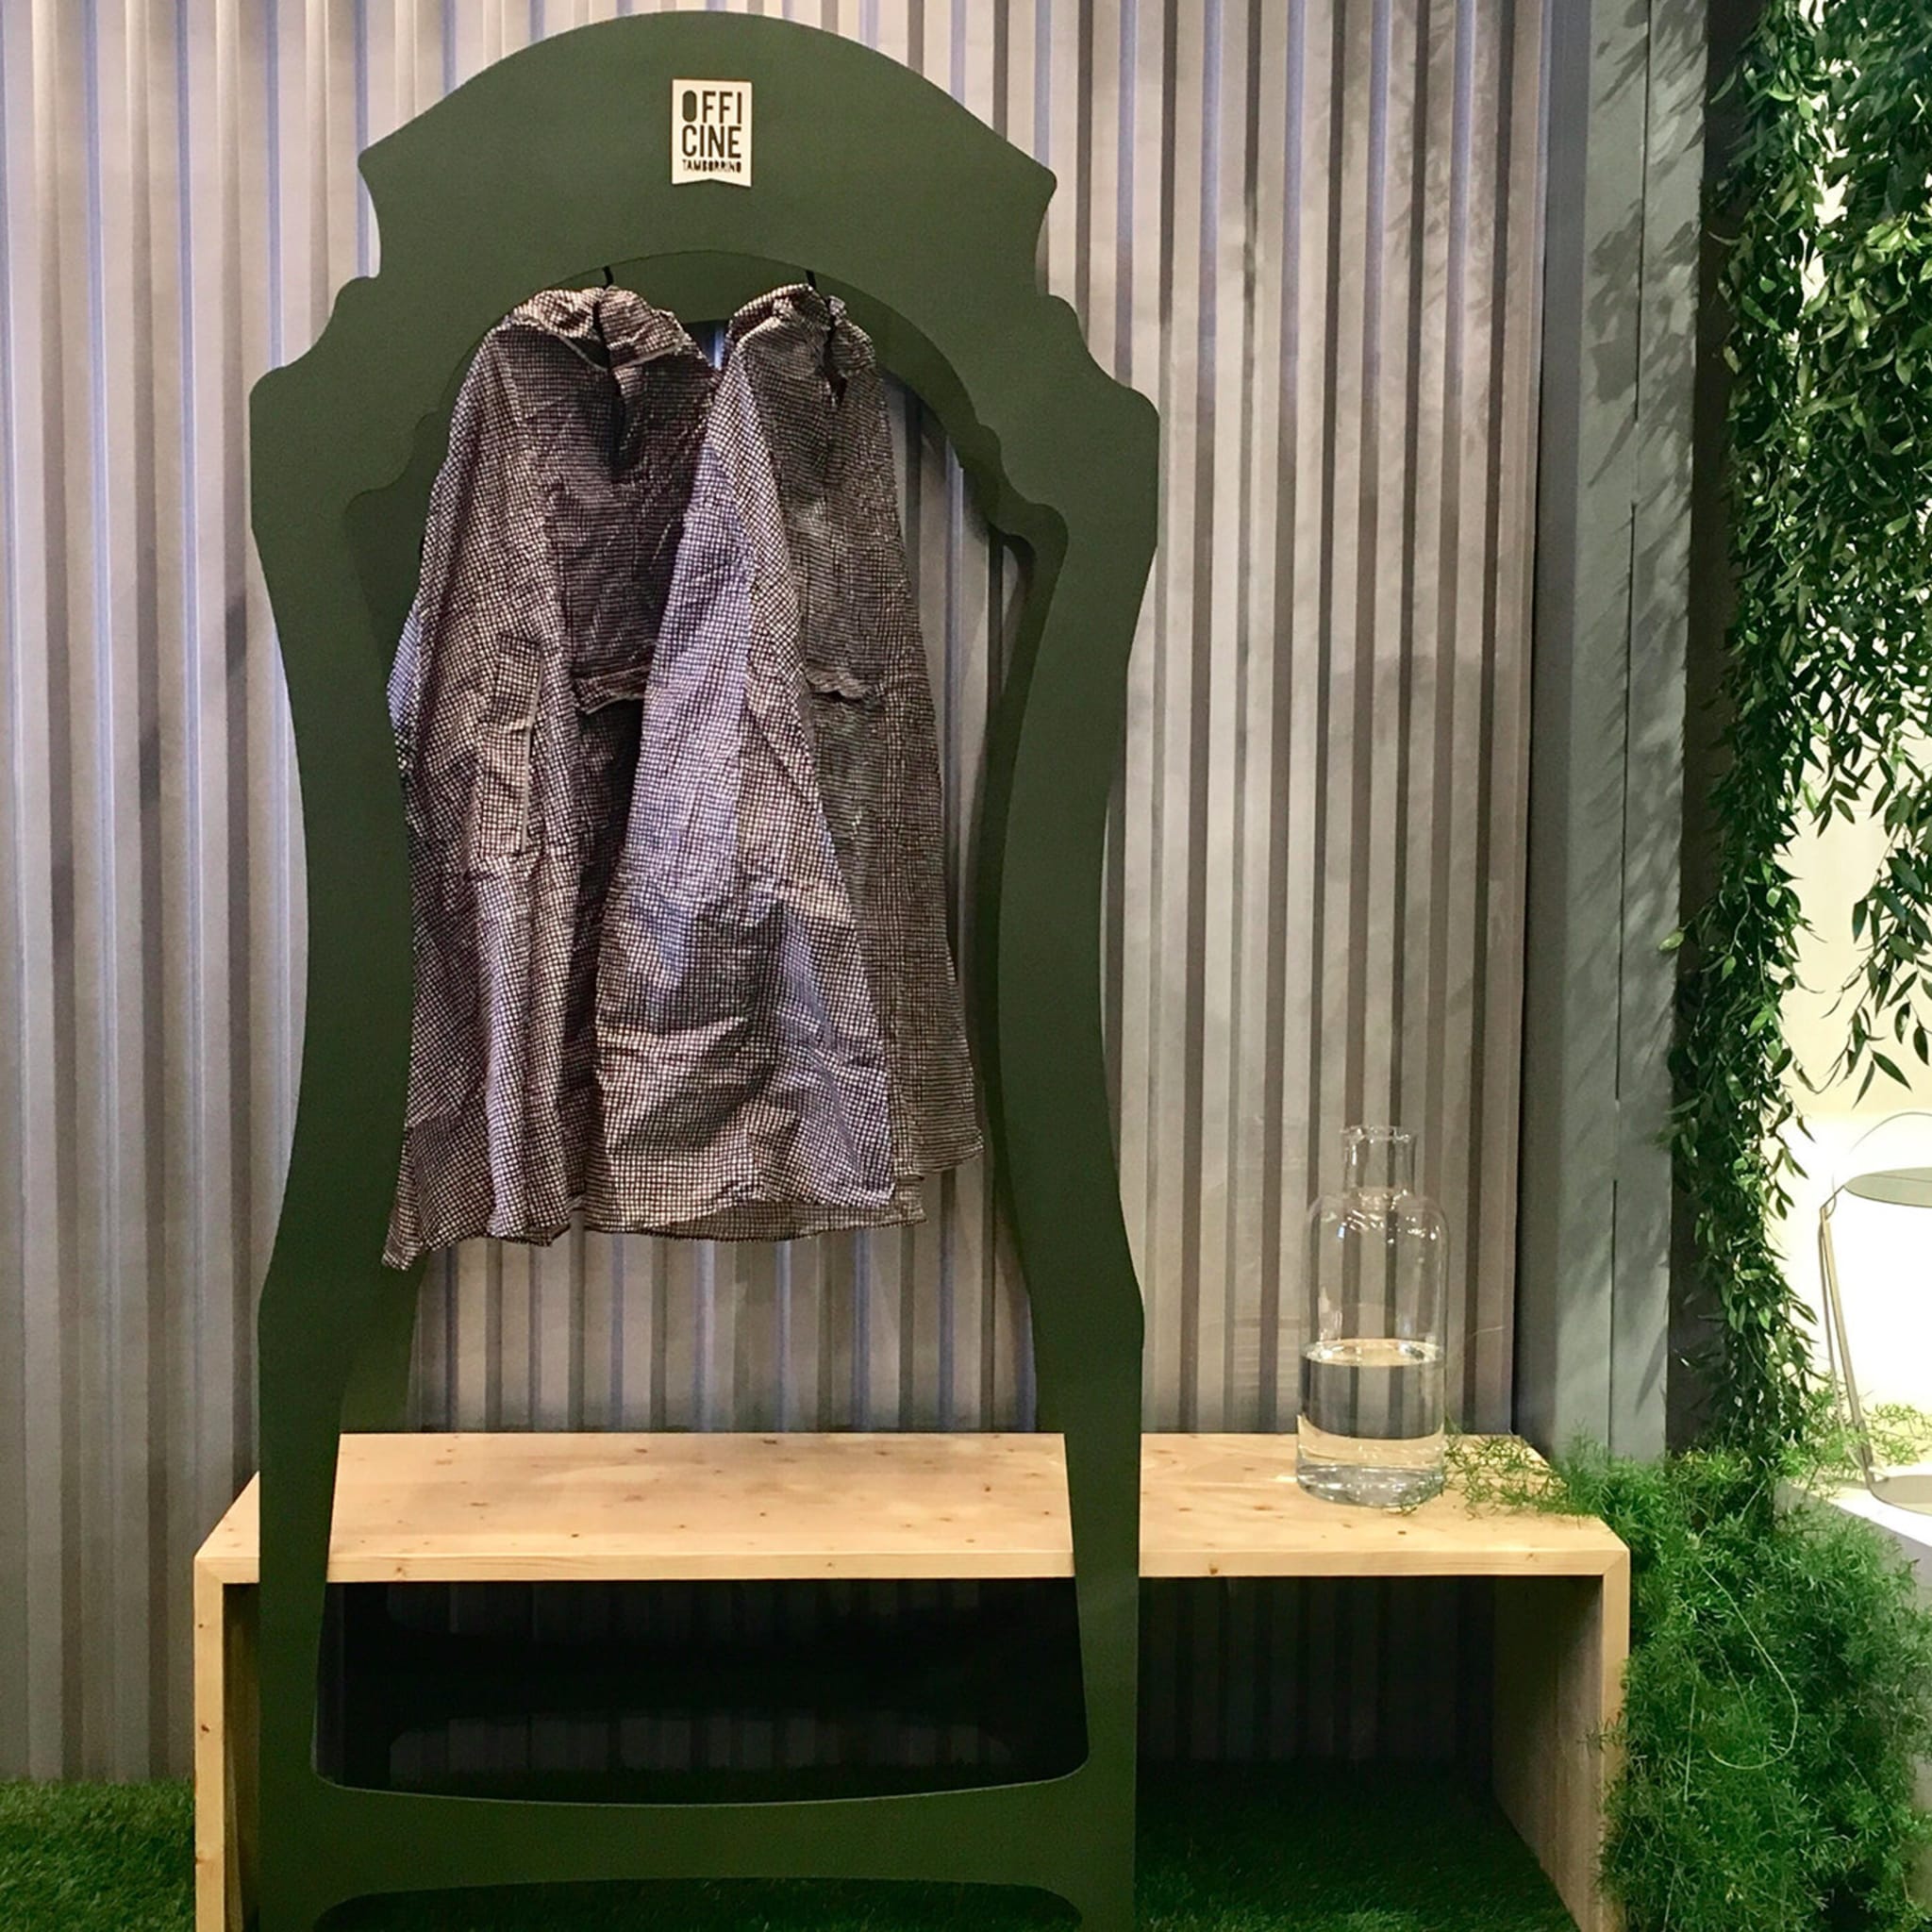 Segno Wardrobe with Bench #1 by Flore & Venezia - Alternative view 3